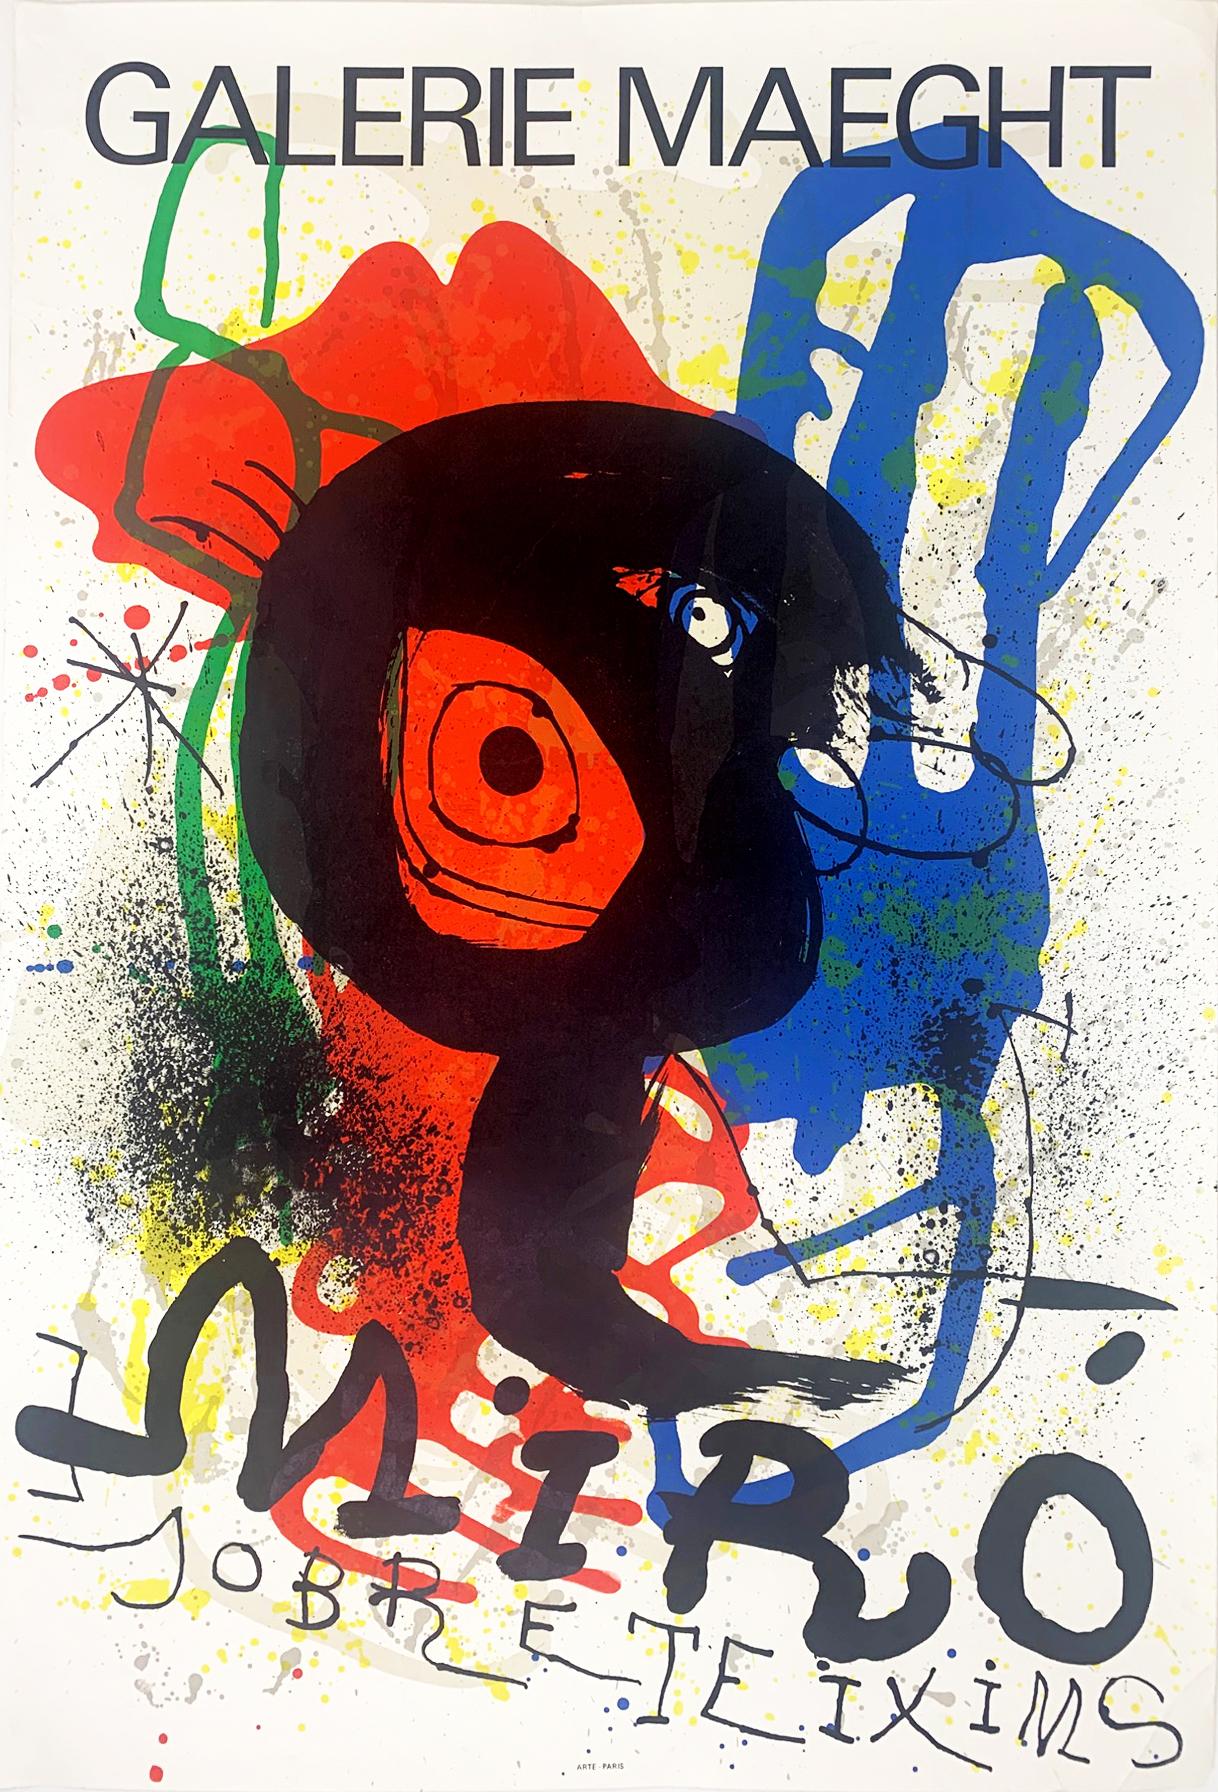 Joan Miró Abstract Print - Sobreteixims